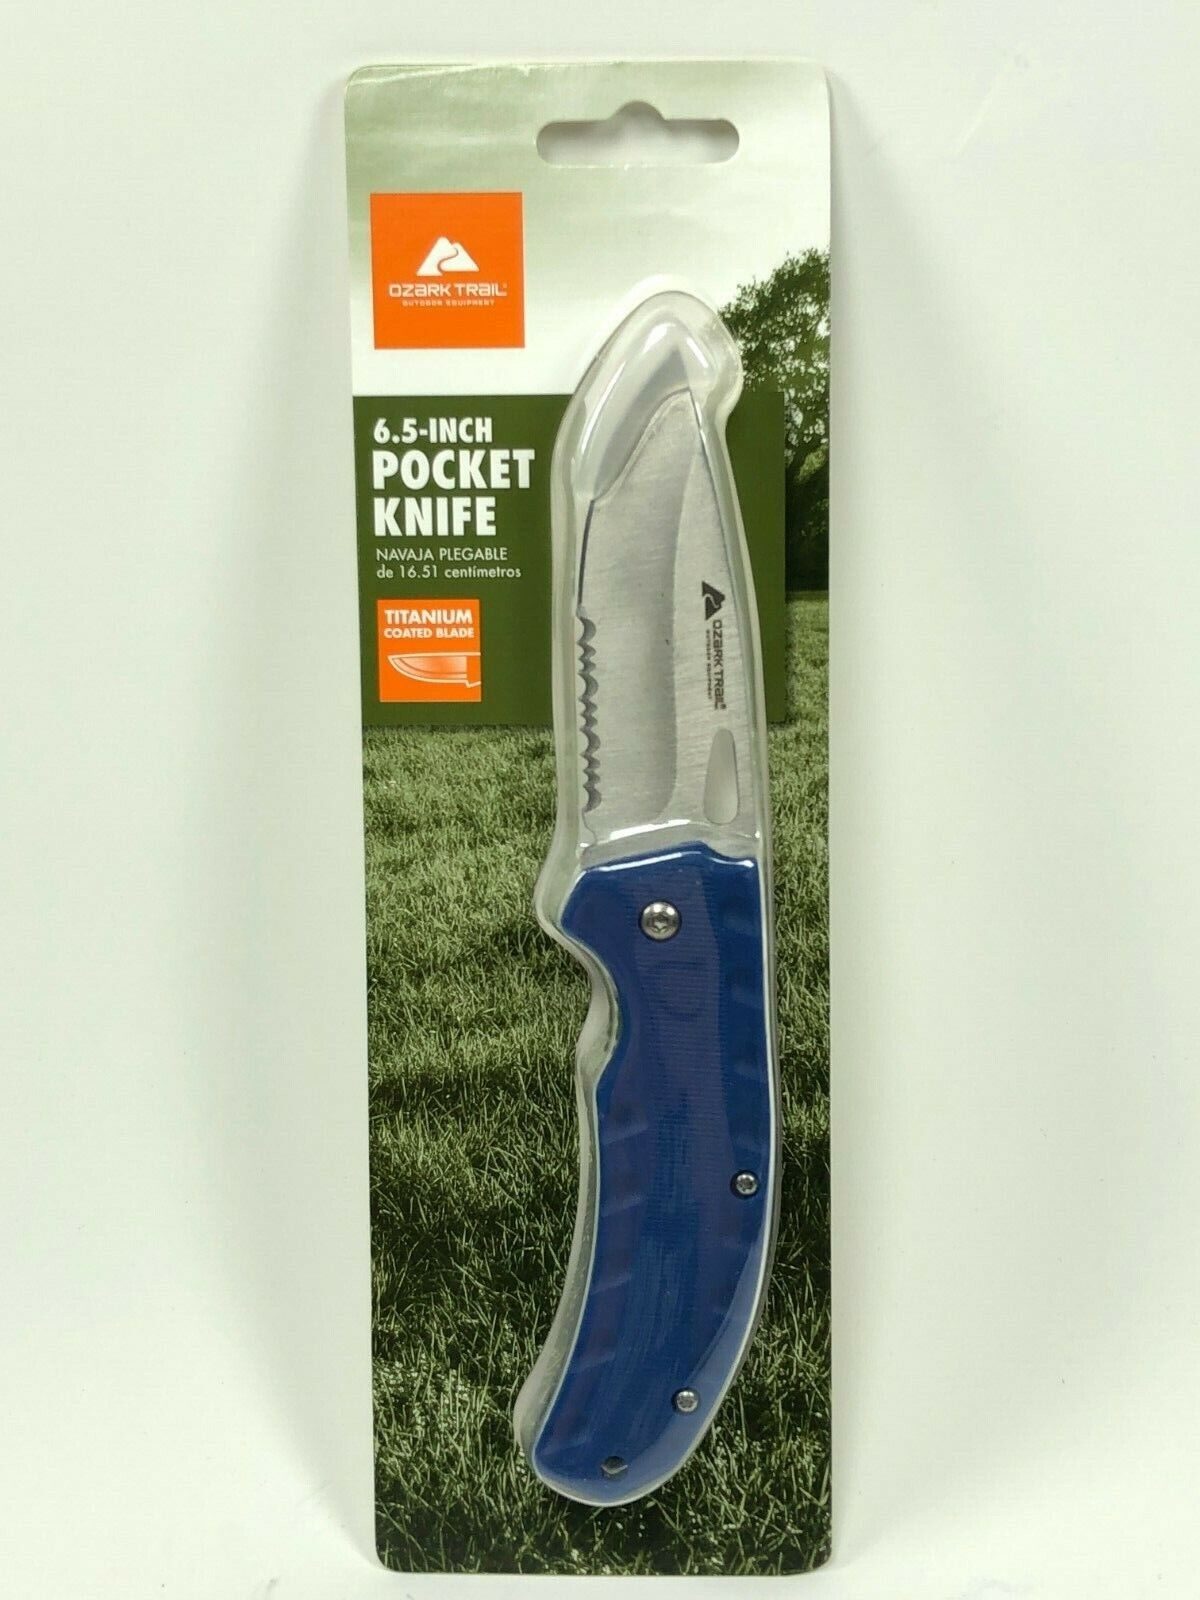 Ozark Trail 6.5 Inch Pocket Knife - Blue - Titanium Coated 2.65 inch Blade Clip